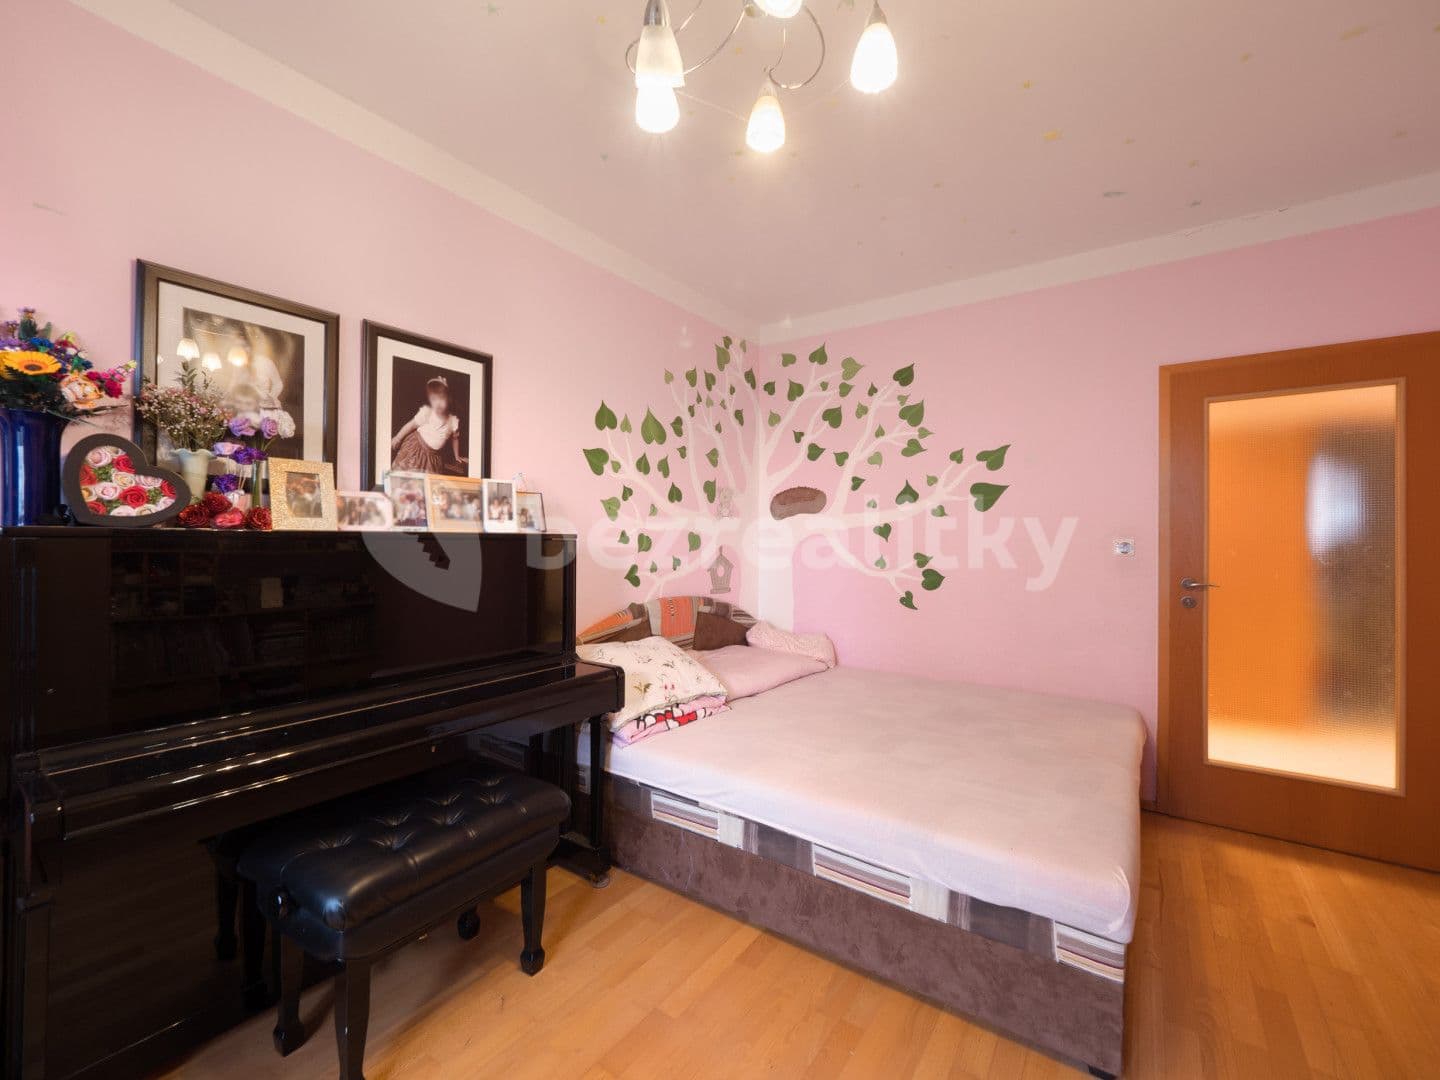 3 bedroom with open-plan kitchen flat for sale, 101 m², Mattioliho, Prague, Prague